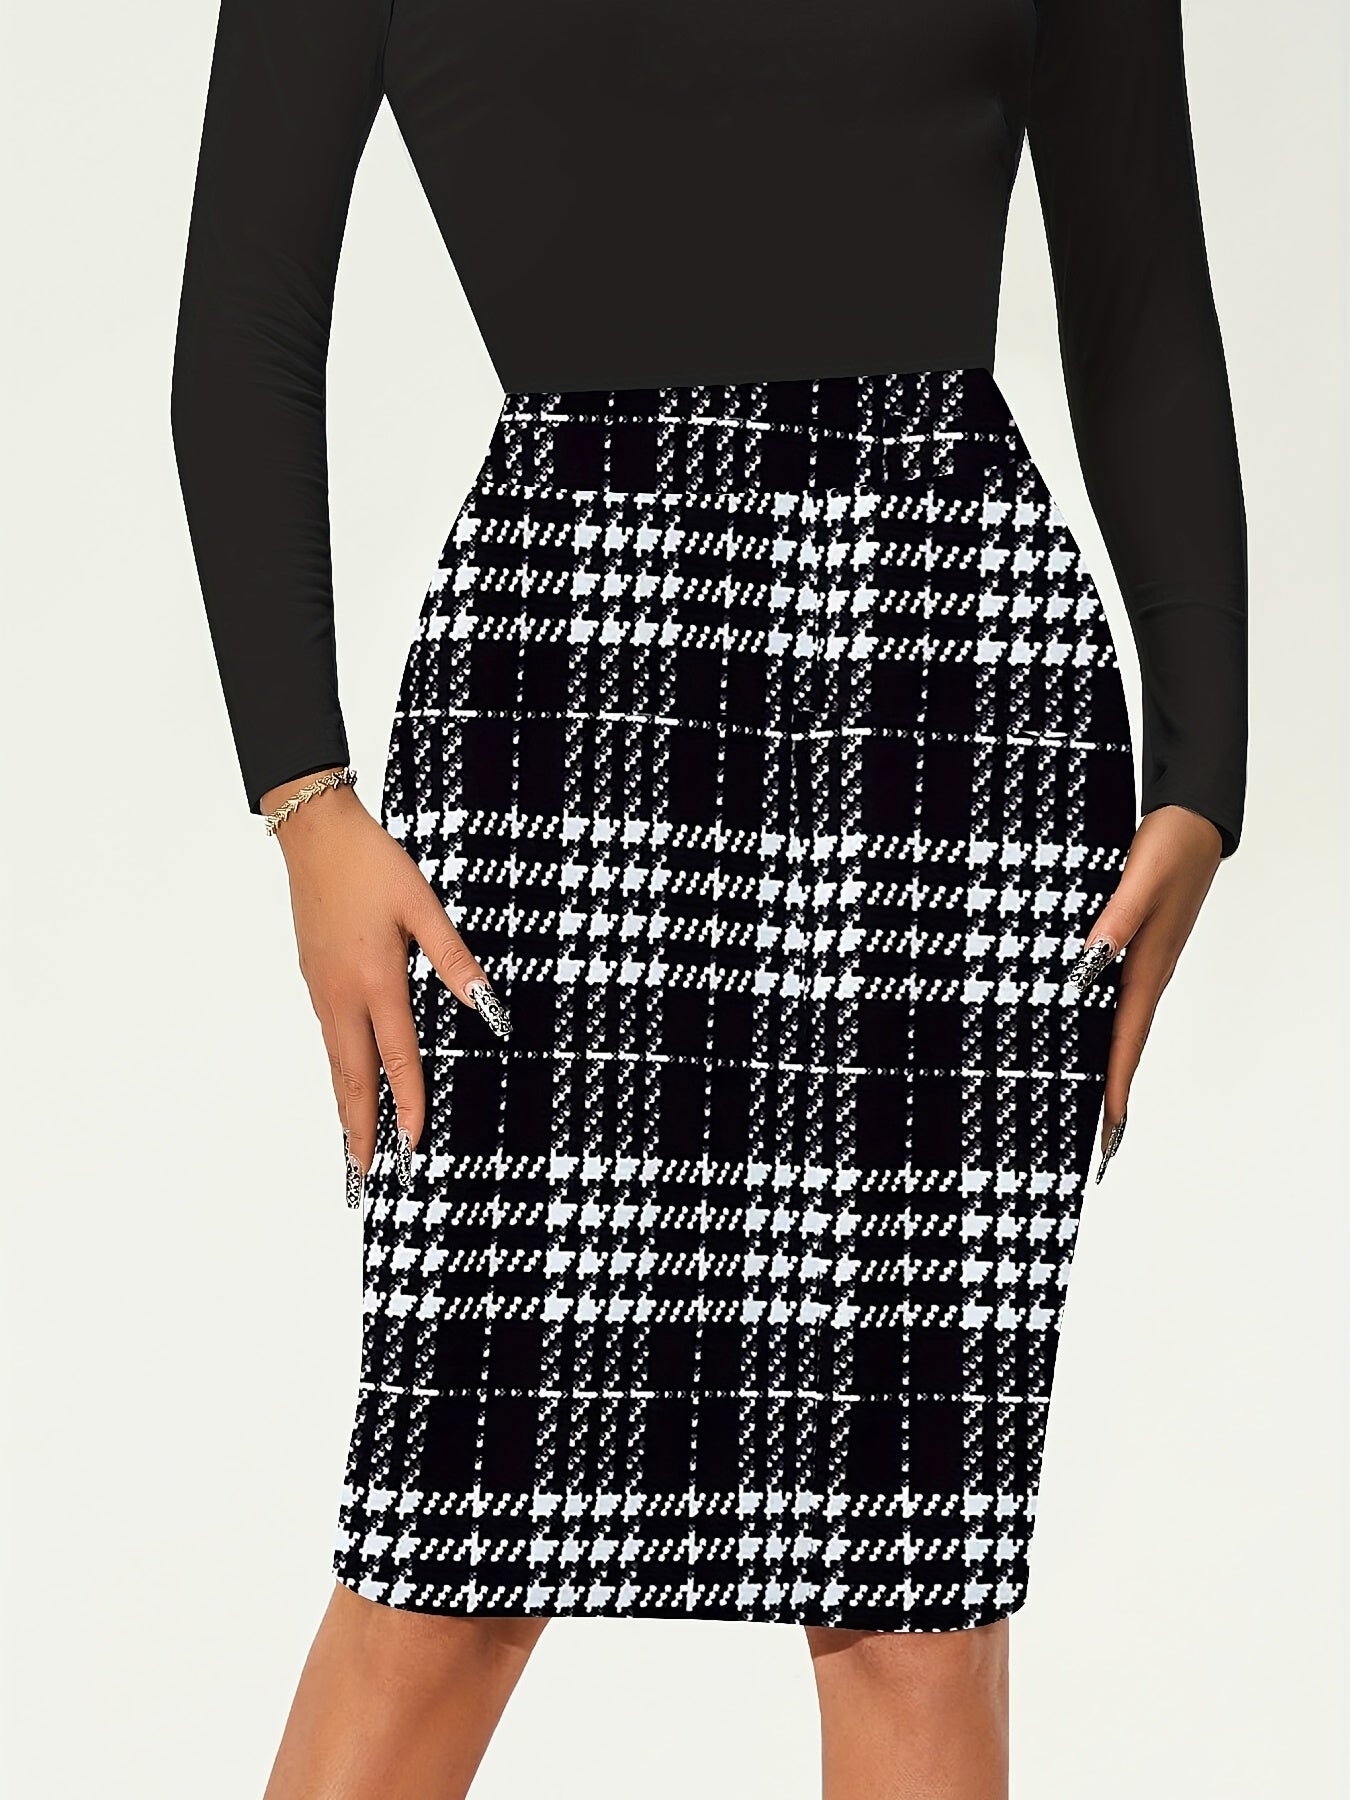 Antmvs Plaid High Waist Pencil Skirt, Elegant Knee Length Bodycon Skirt, Women's Clothing